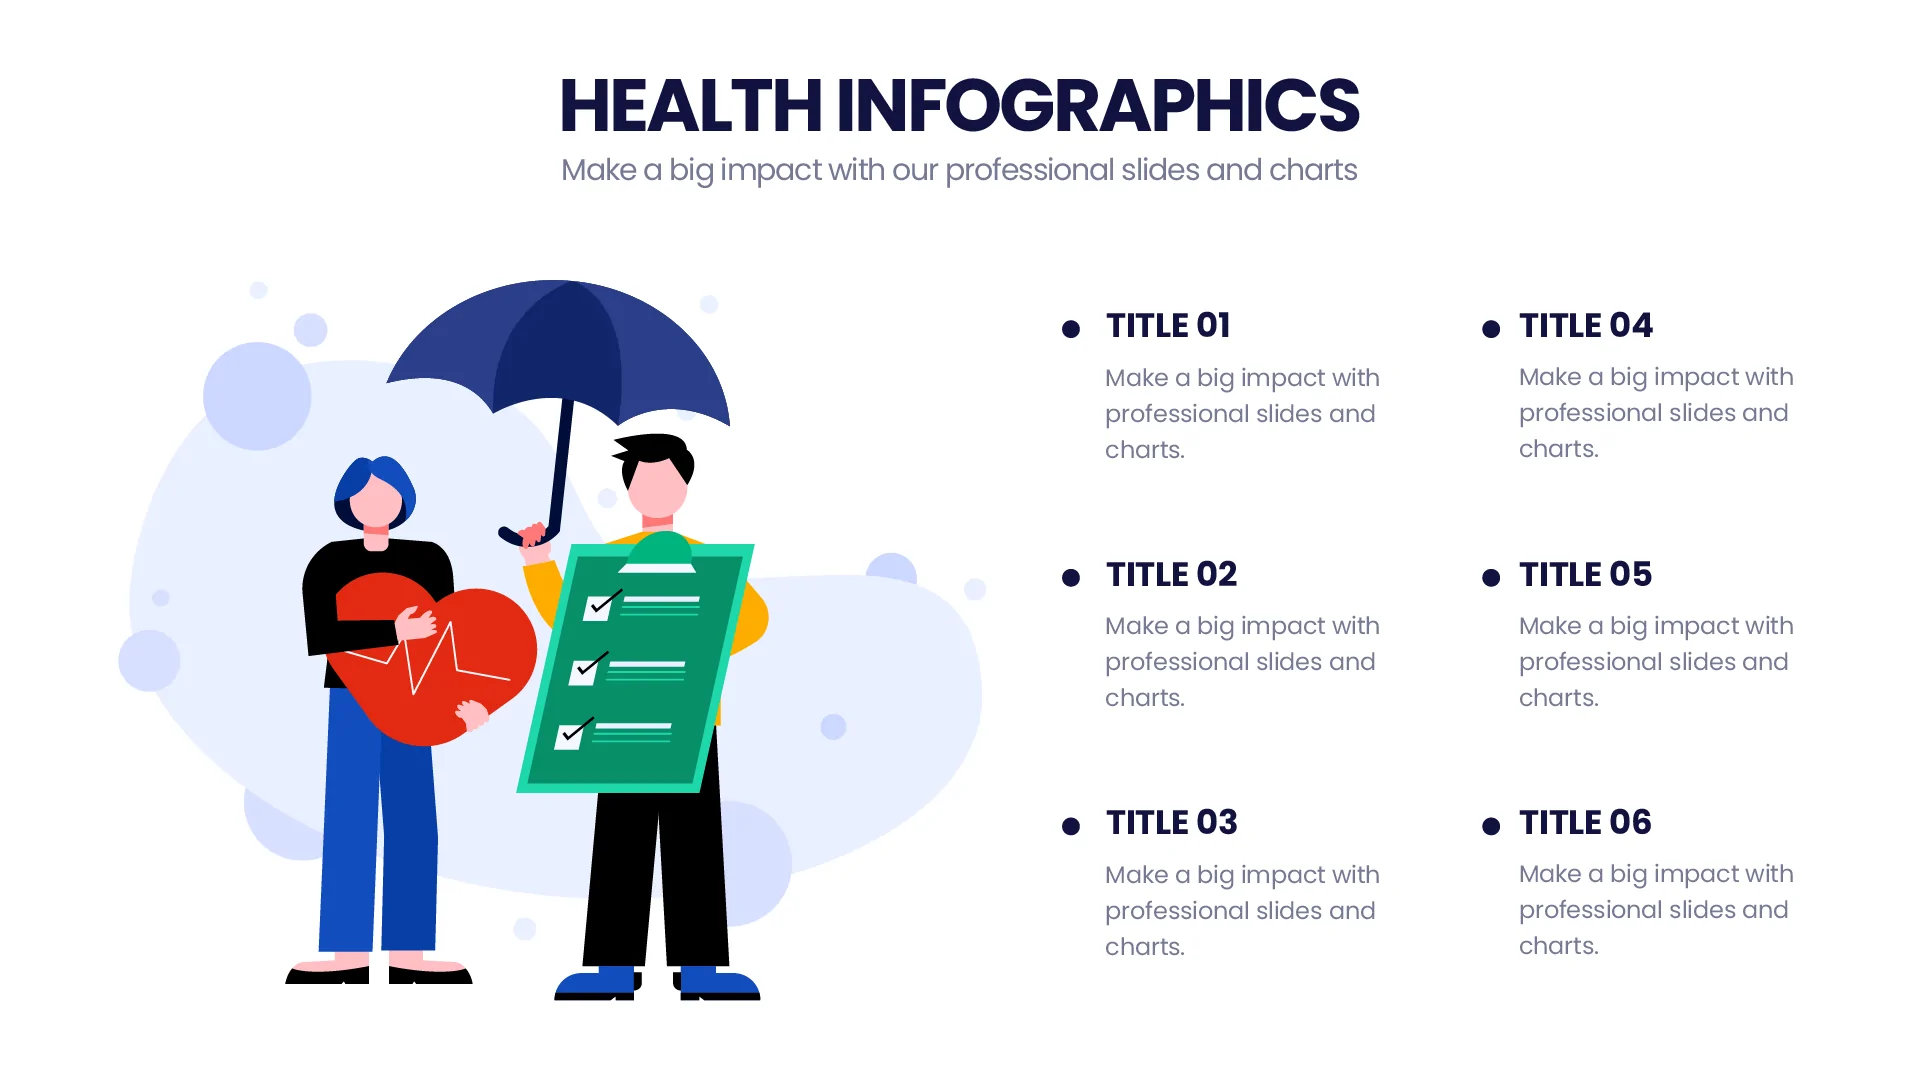 Health Infographic templates